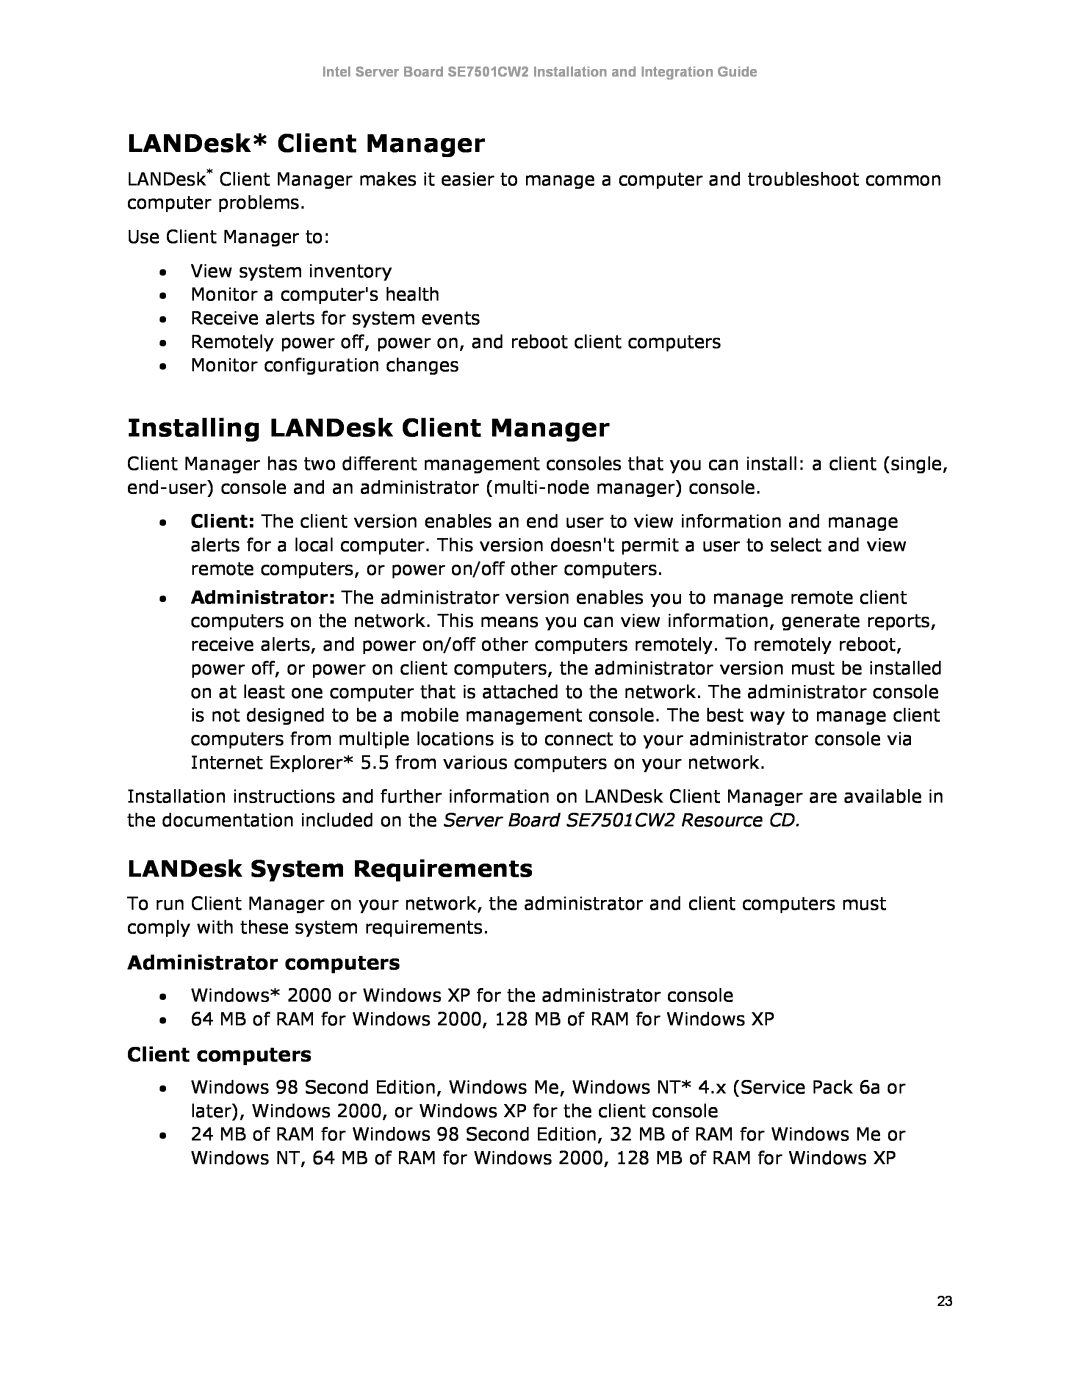 Intel SE7501CW2 manual LANDesk* Client Manager, Installing LANDesk Client Manager, LANDesk System Requirements 